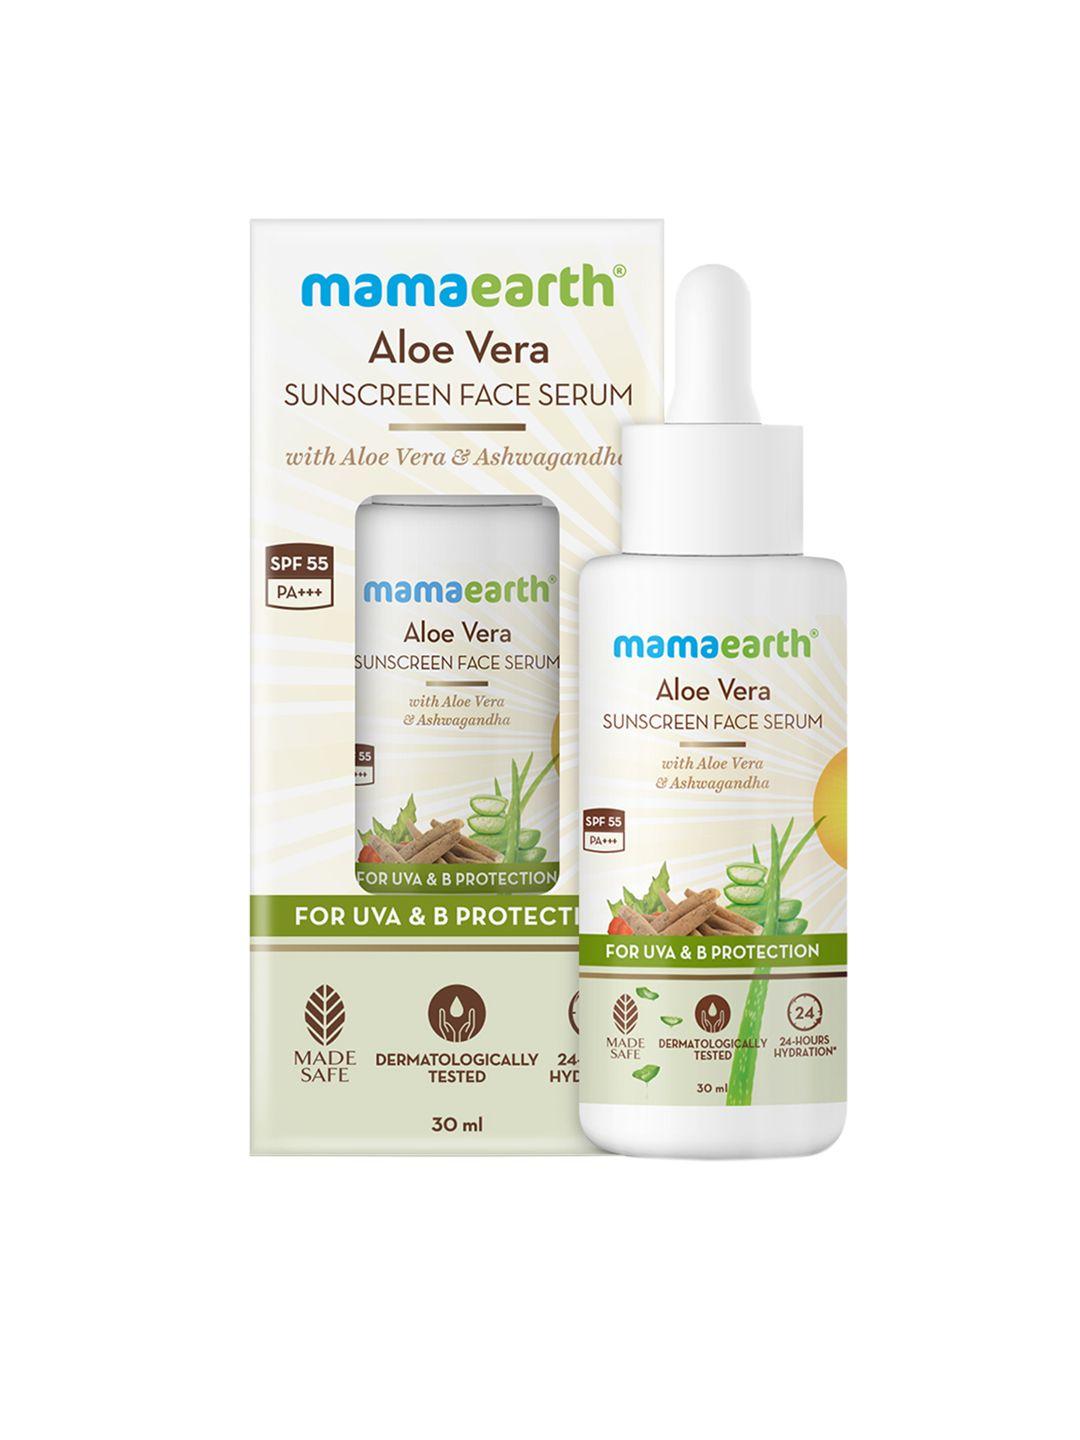 mamaearth aloe vera sunscreen face serum with ashwagandha 30 ml